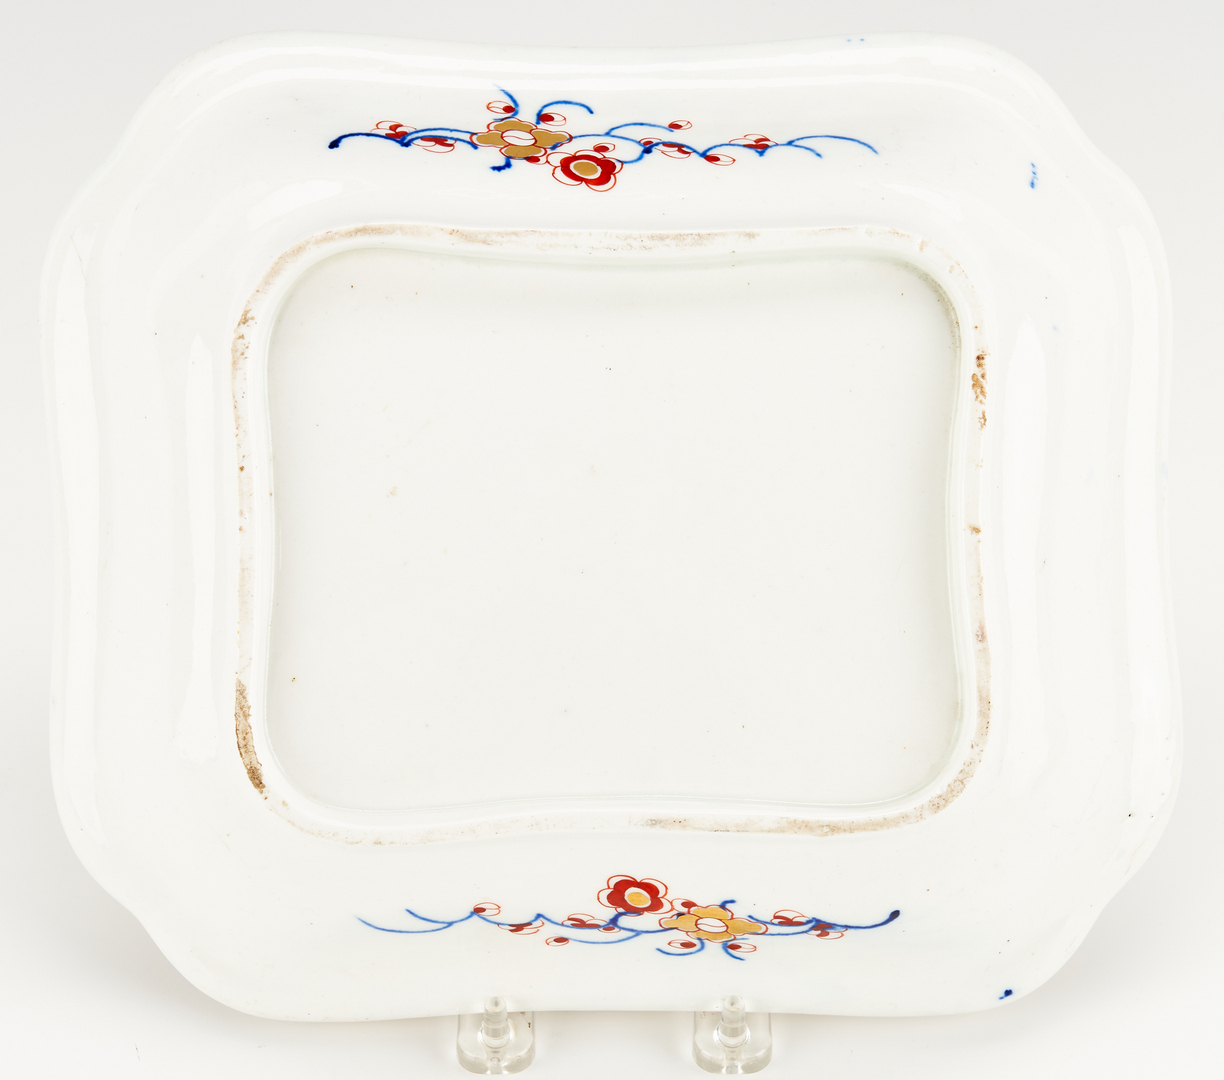 Lot 186: 13 English & Japanese Imari Pattern Porcelain Items, incl. Royal Crown Derby